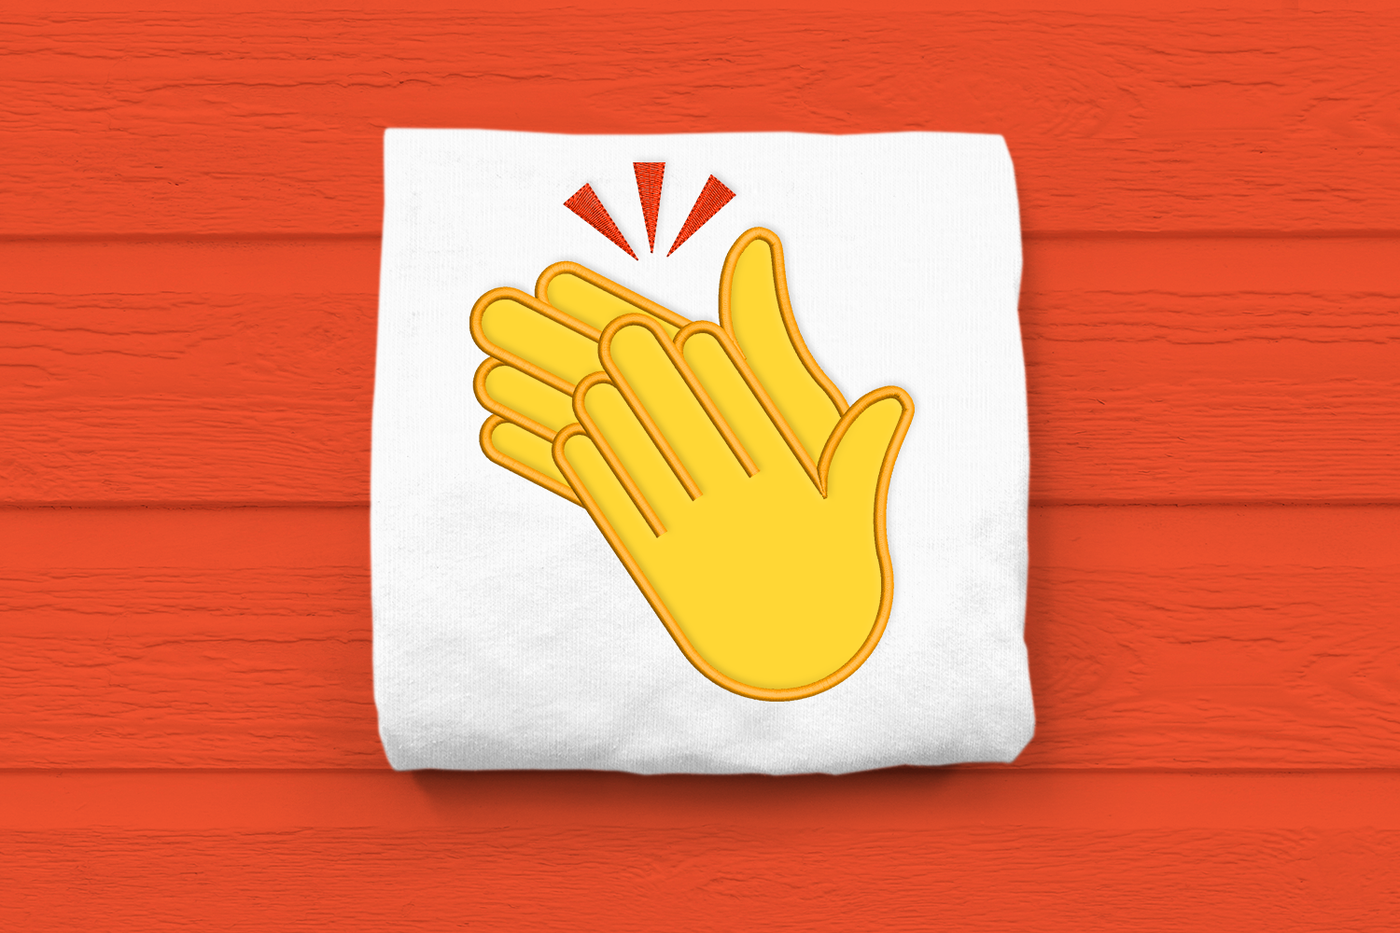 Clapping hands emoji applique